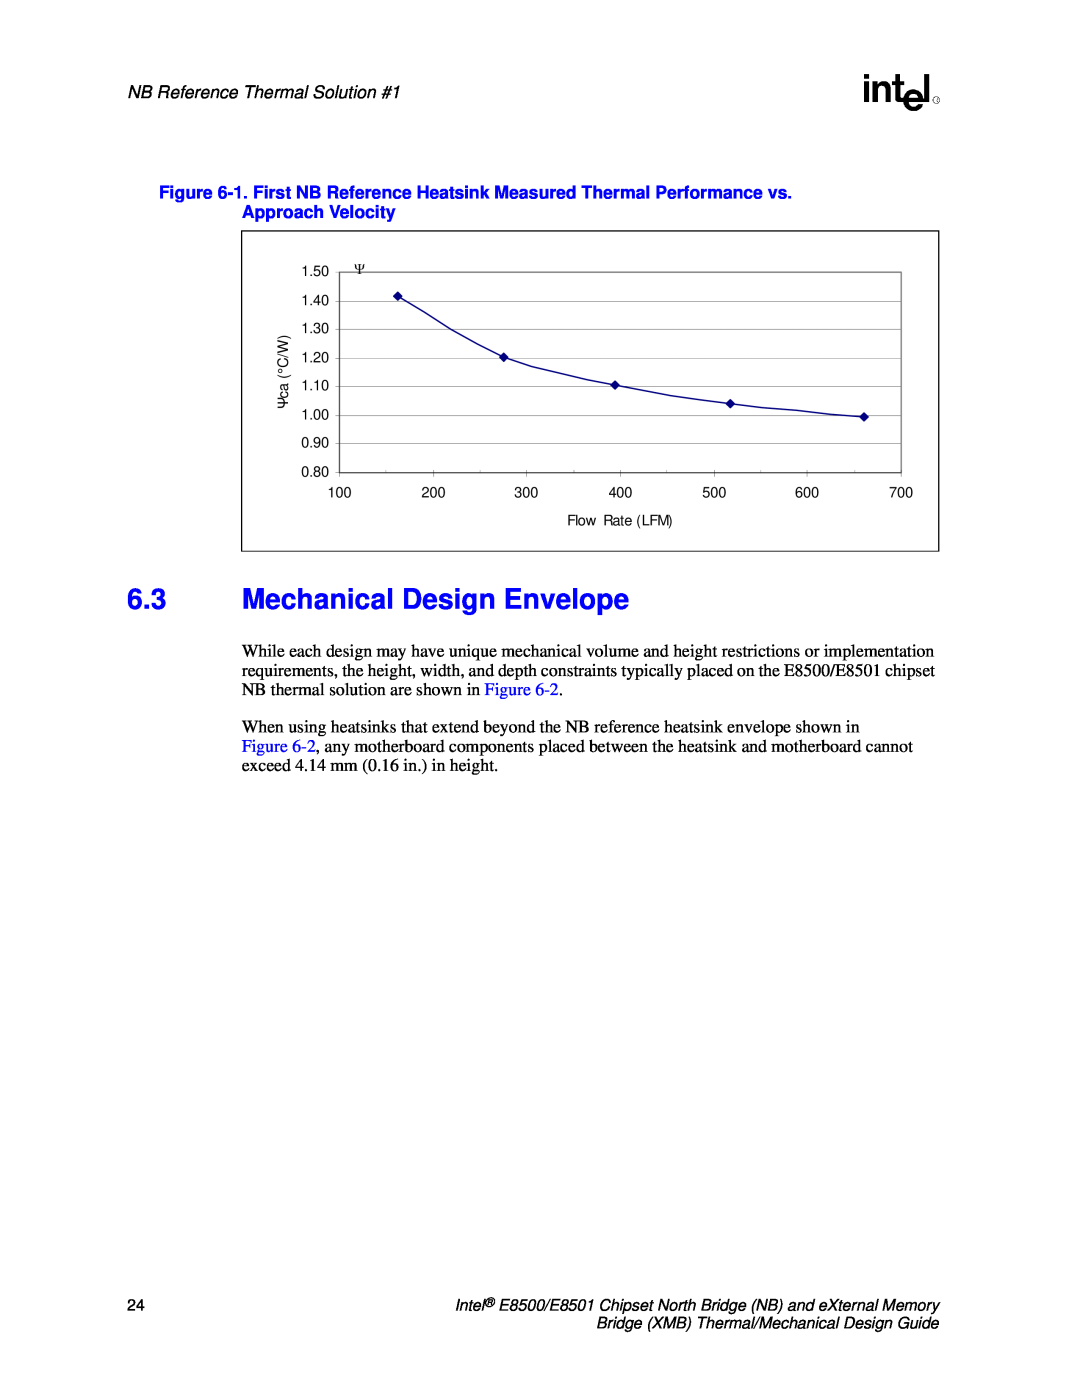 Intel E8501 manual 6.3Mechanical Design Envelope, NB Reference Thermal Solution #1 